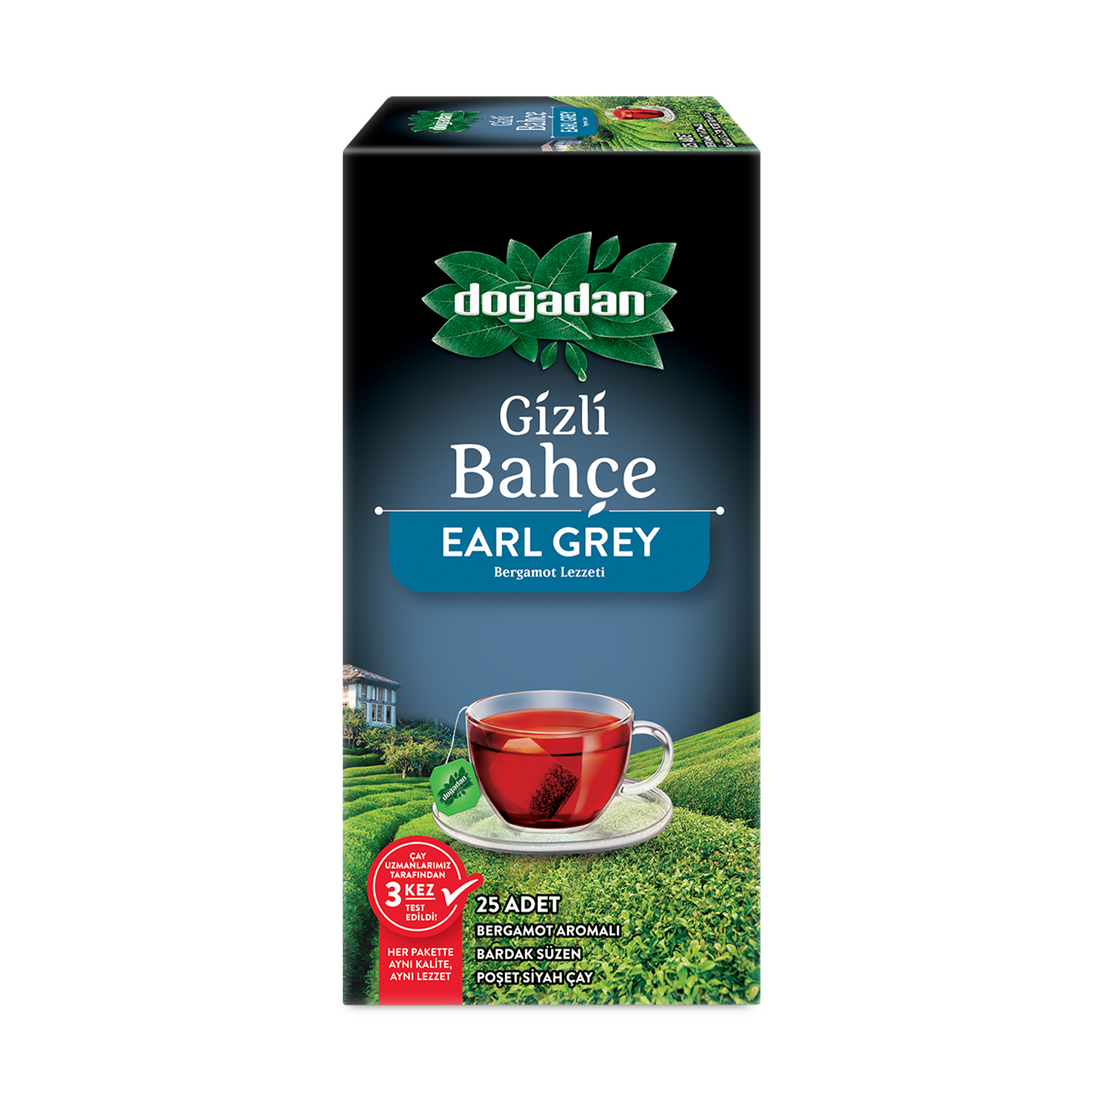 Dogadan Gizli Bahce Earl Gray- Tea Bag 2g×25P | Dogadan Gizli Bahce Earl Gray Bardak Suzen Poset | Bergamot Flavored Black Tea Tea Bag